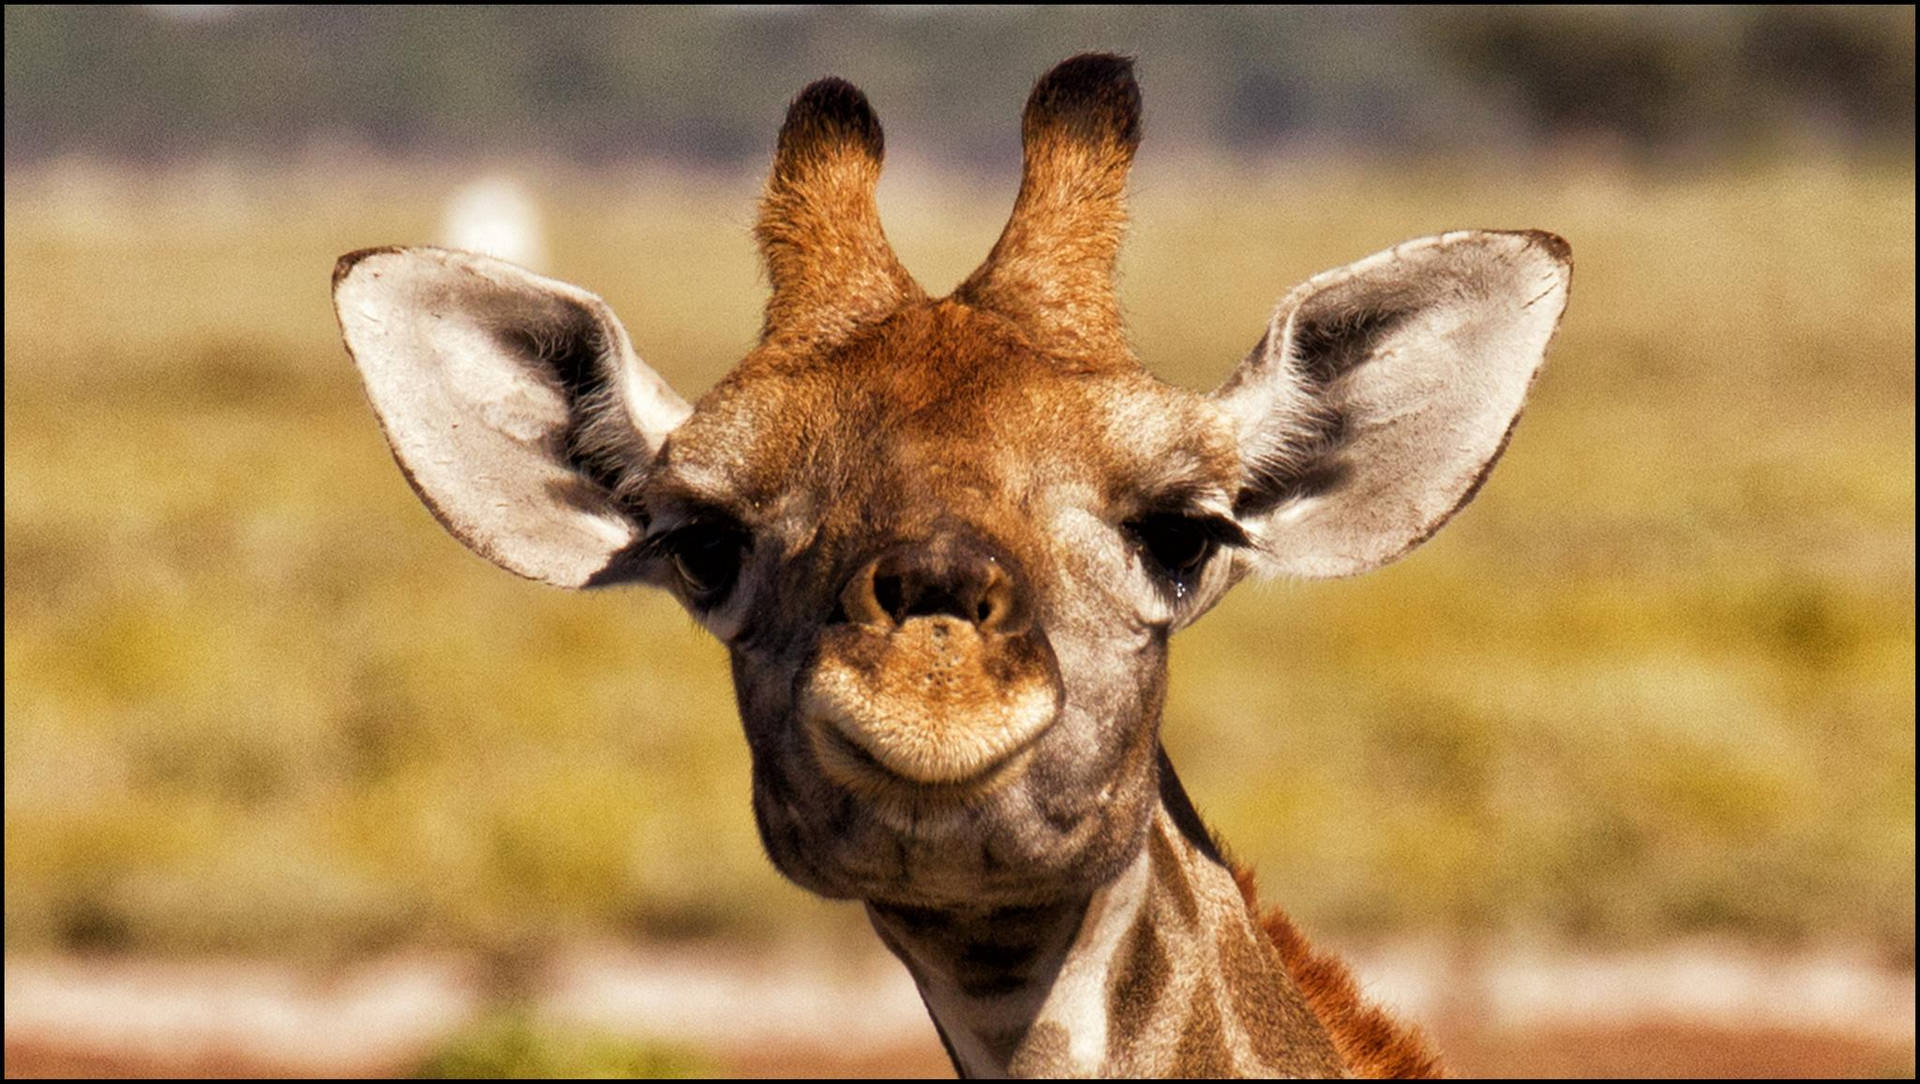 Baby Giraffe Long Ears